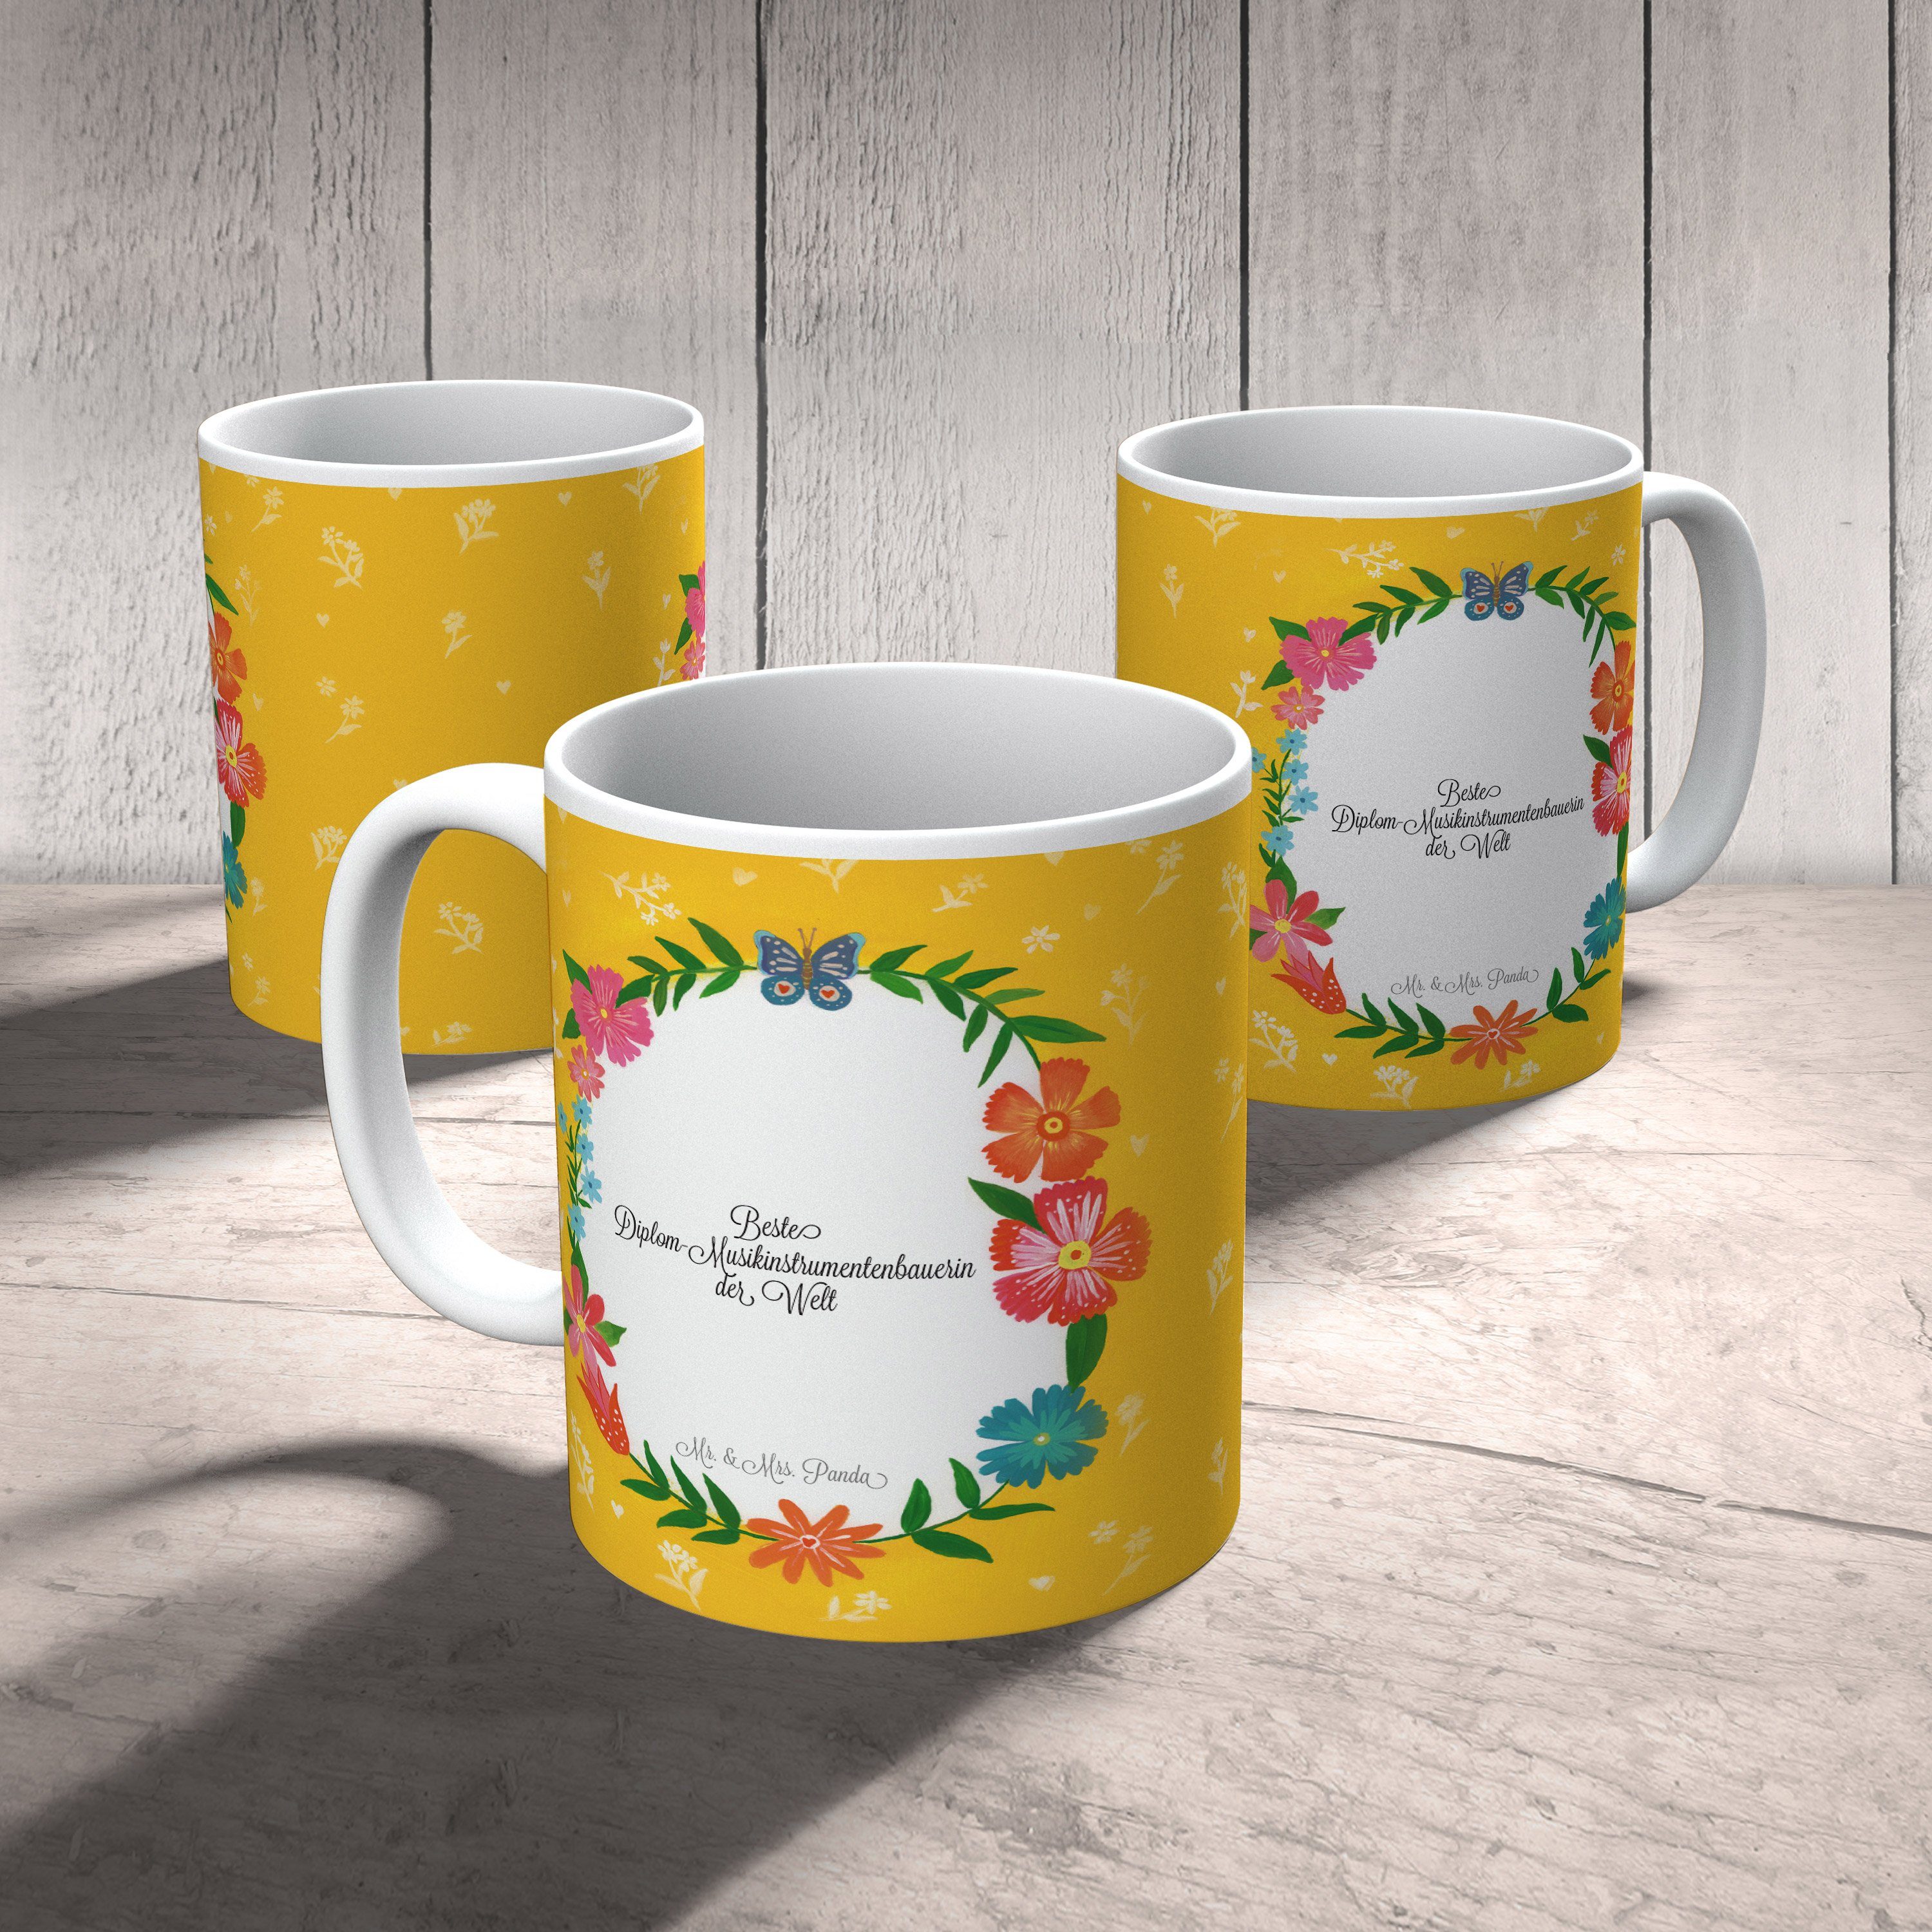 Mr. & Mrs. Panda Tasse Motive, Geschenk, Diplom-Musikinstrumentenbauerin Keramik Tasse - Kaffeetasse